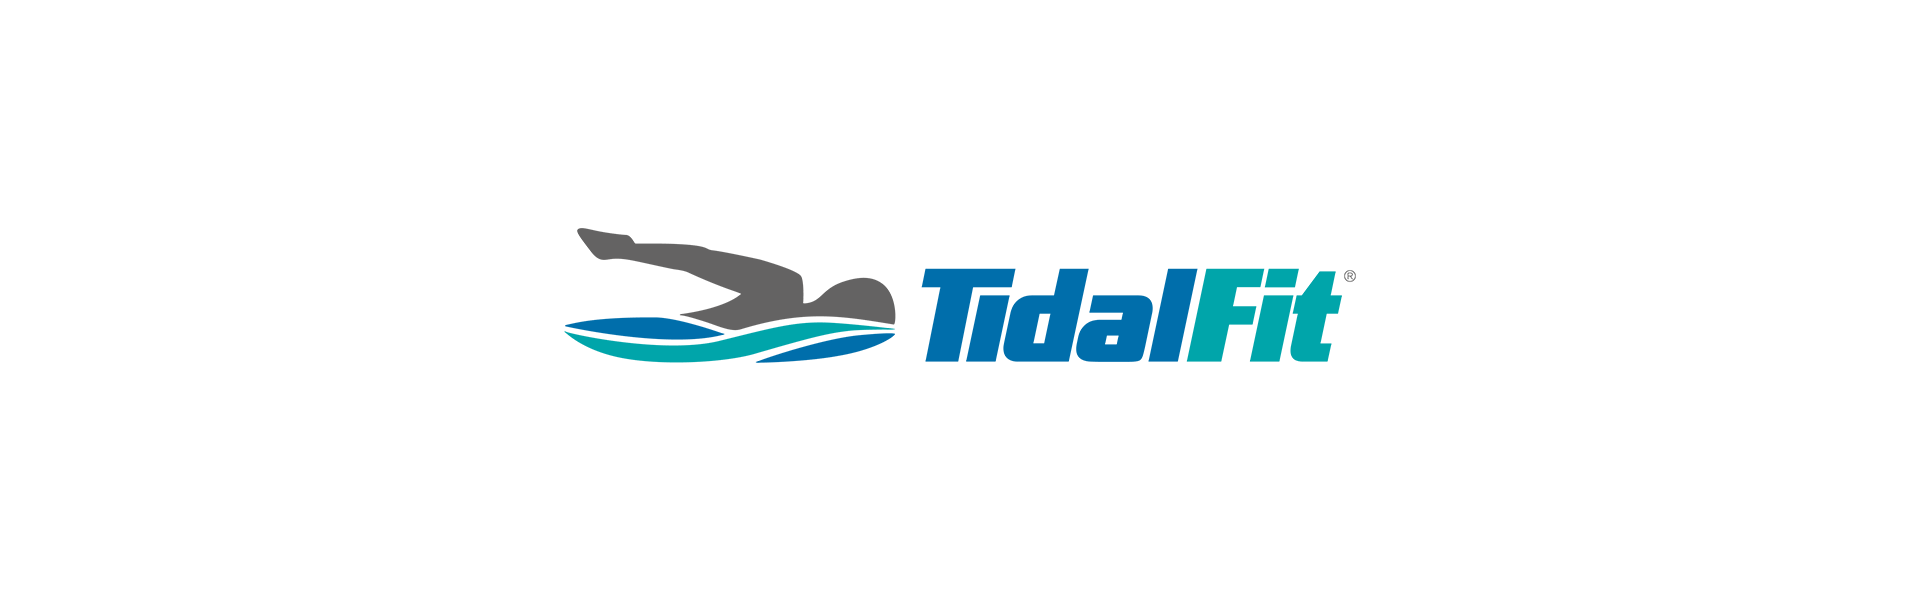 tidalfit-title-logo